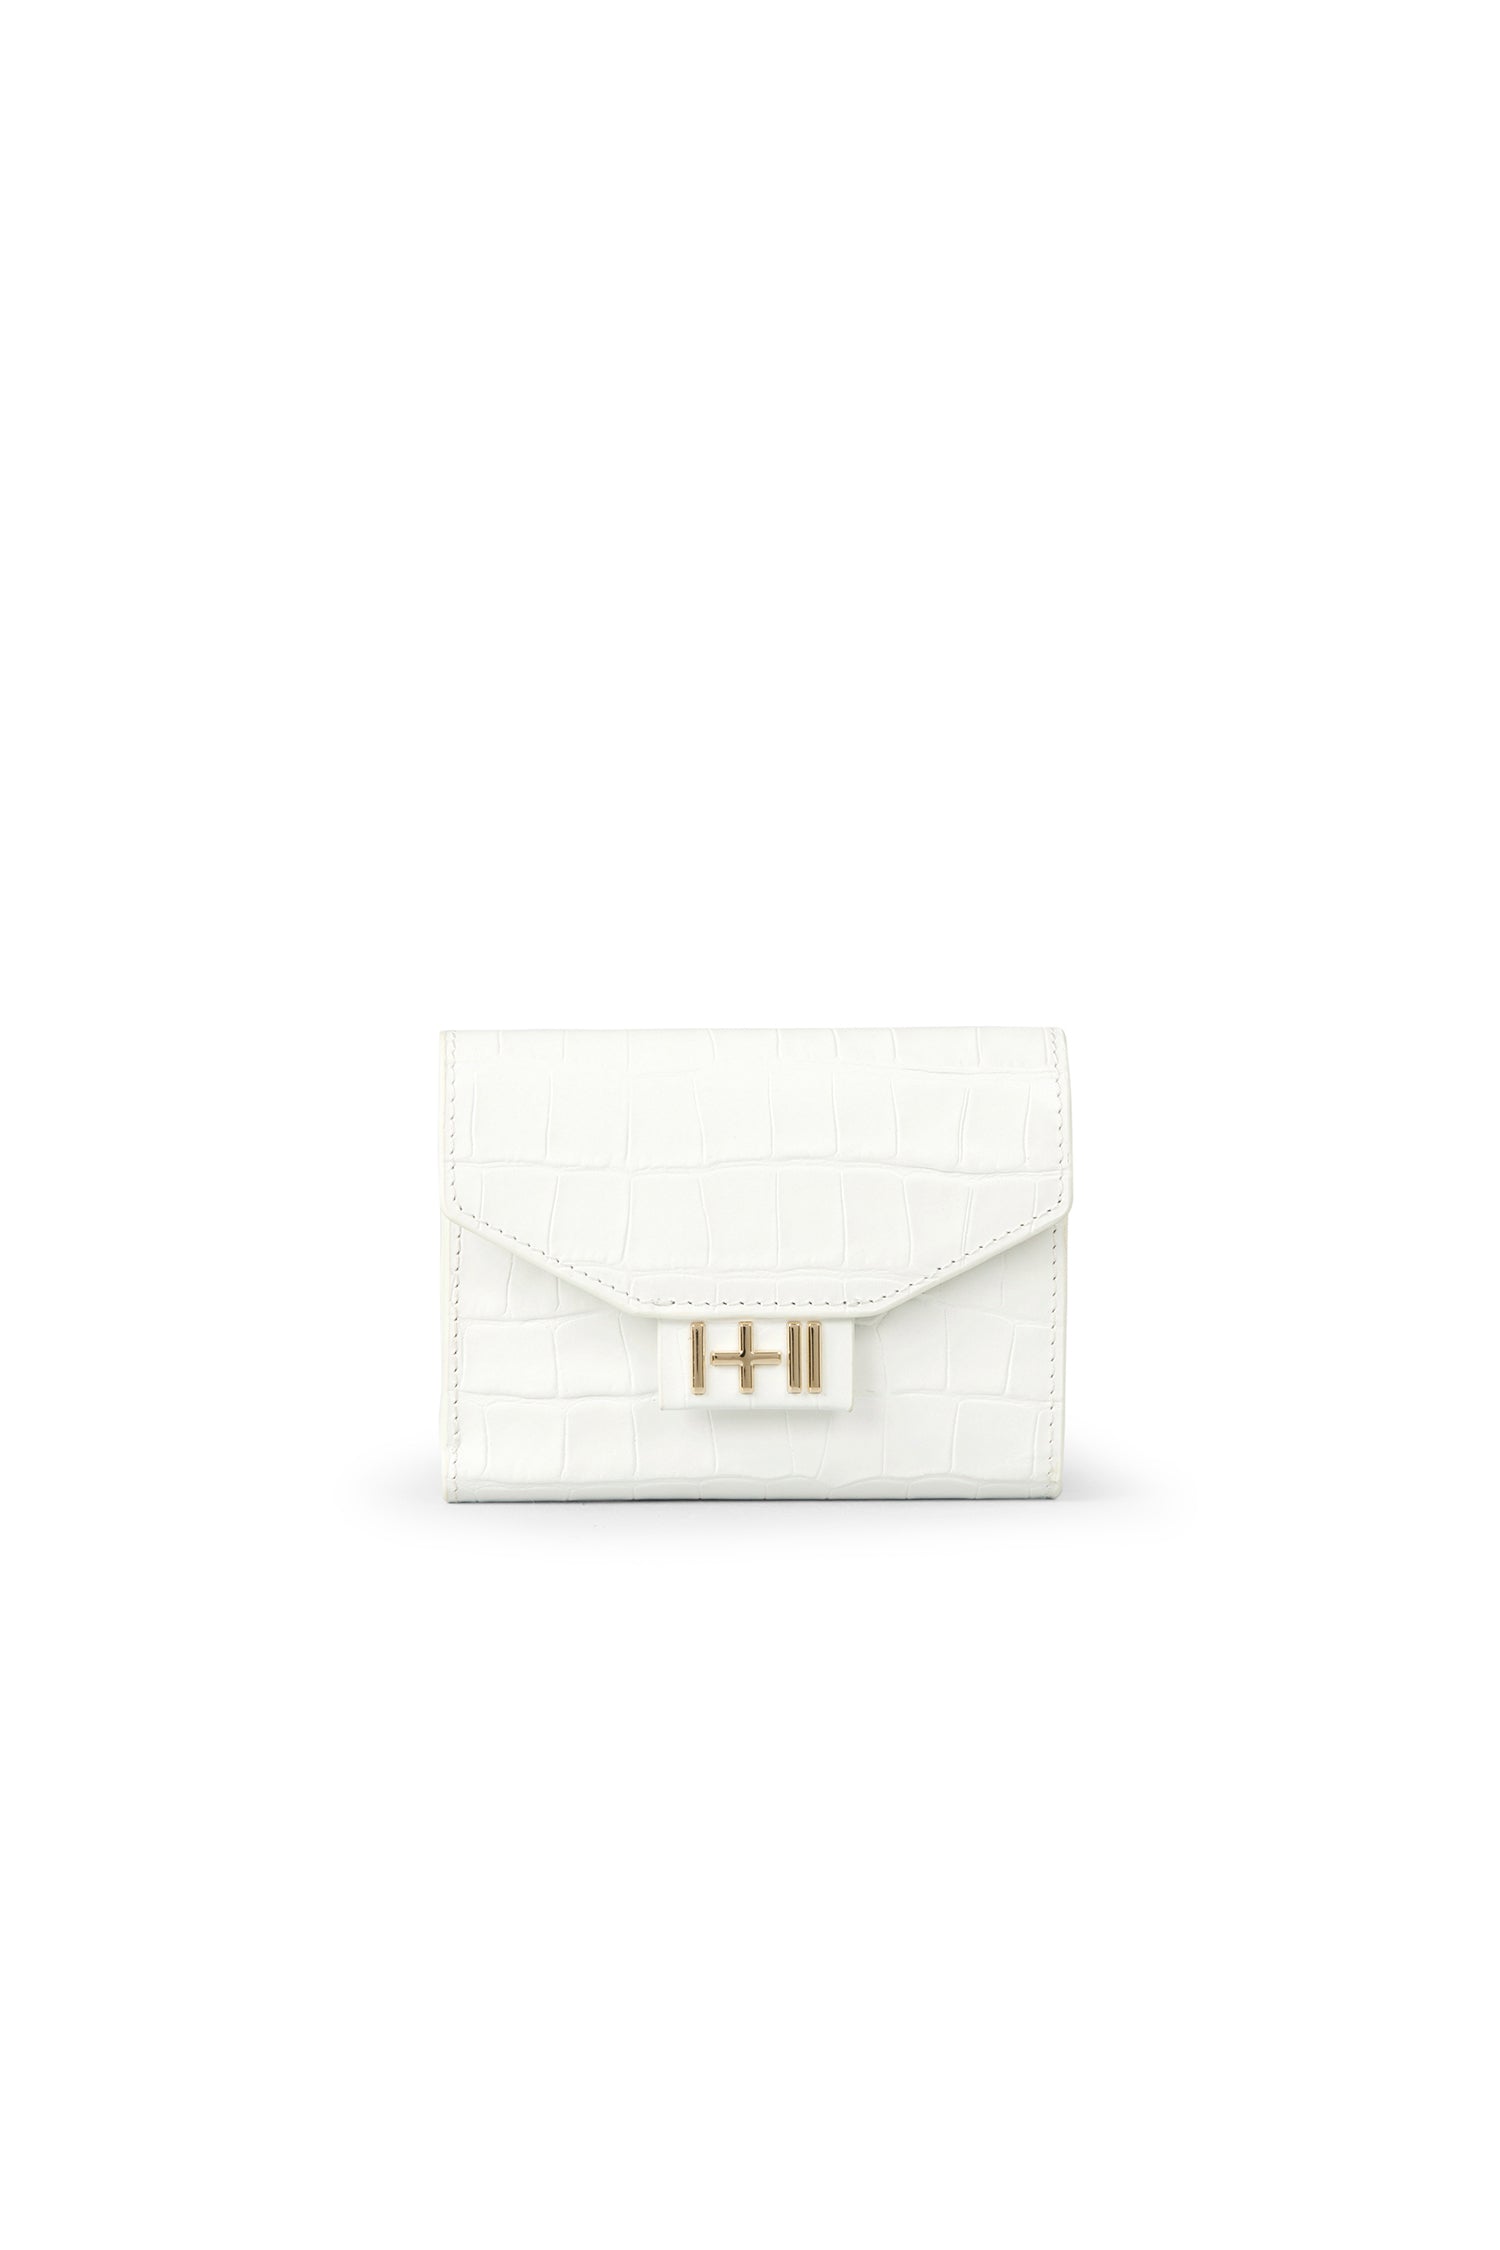 The Helena Wallet White